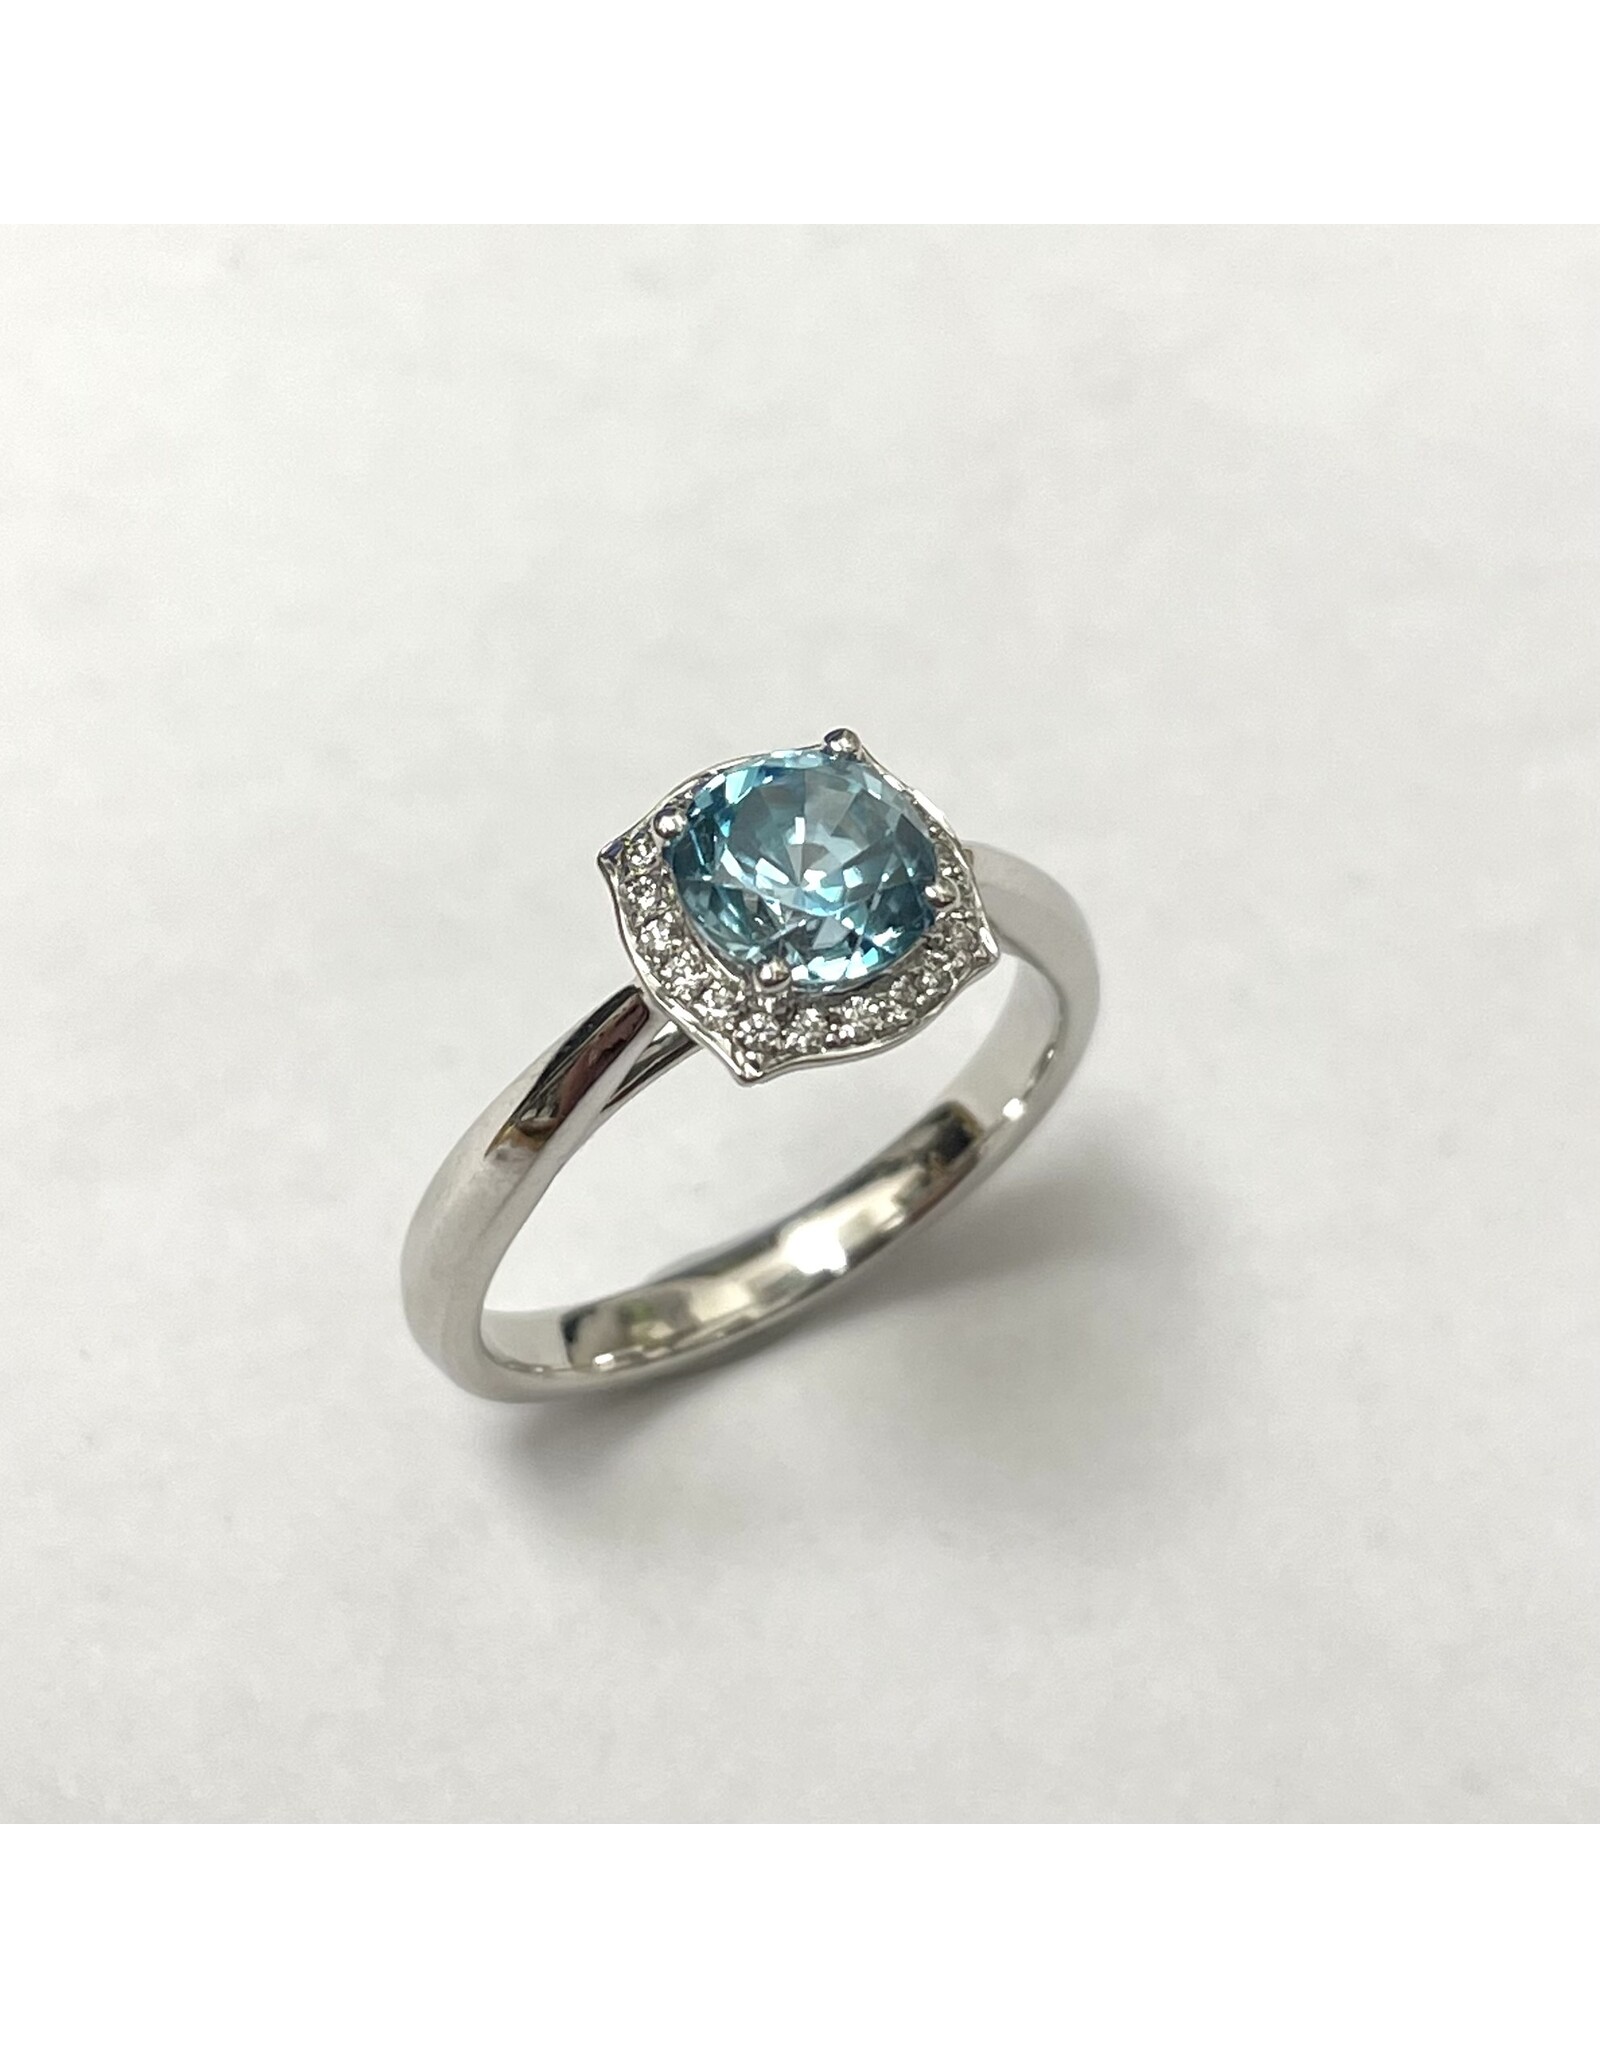 1.73ct Blue Zircon & Diamond Ring 14KW